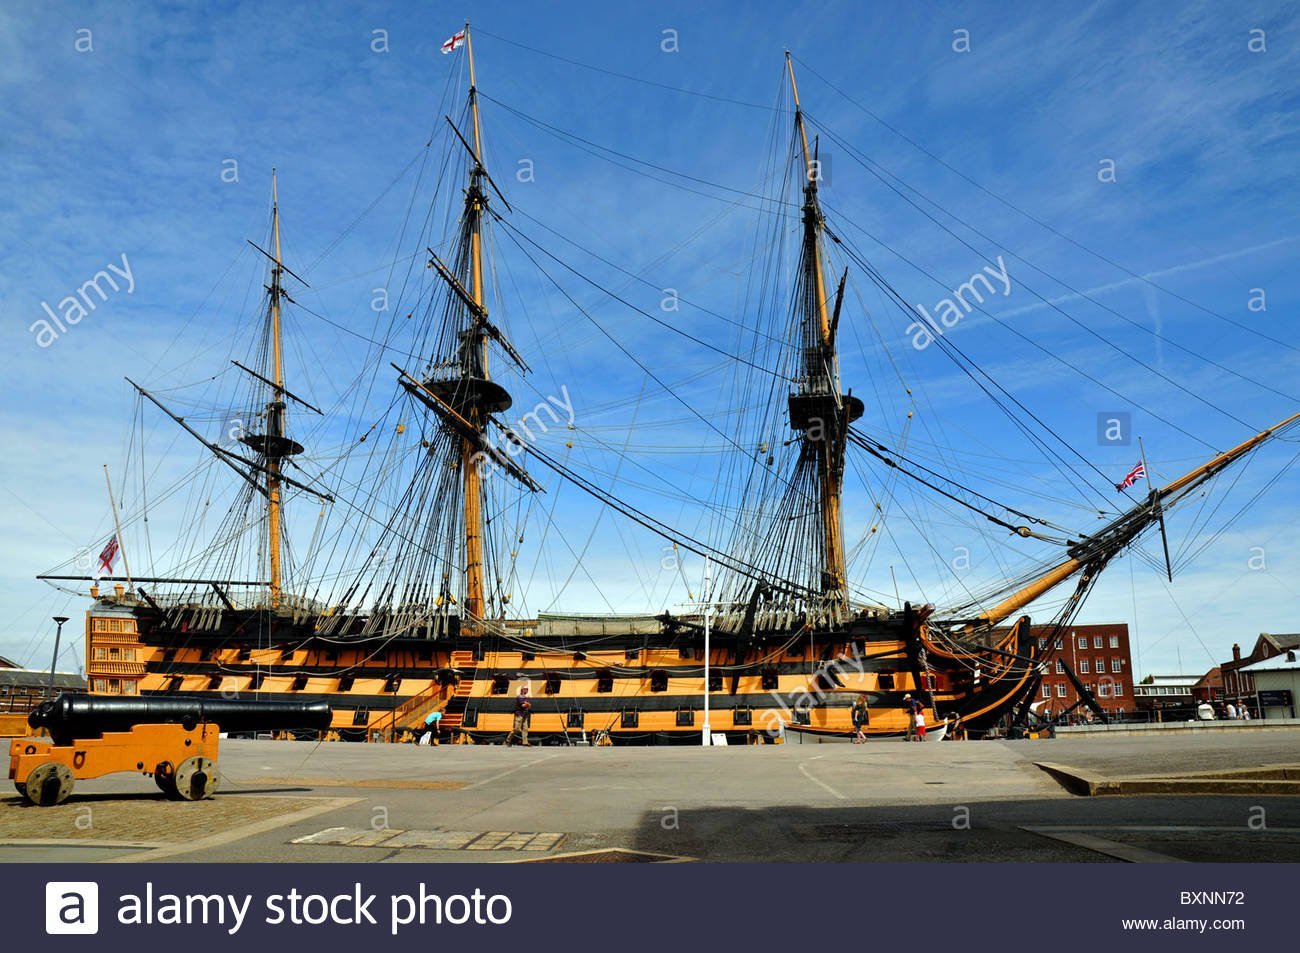 hms-victory-historic-ship-portsmouth-historic-dockyard-hampshire-britain-BXNN72.jpg.3357d3cd37c758767460152a457fda80.jpg